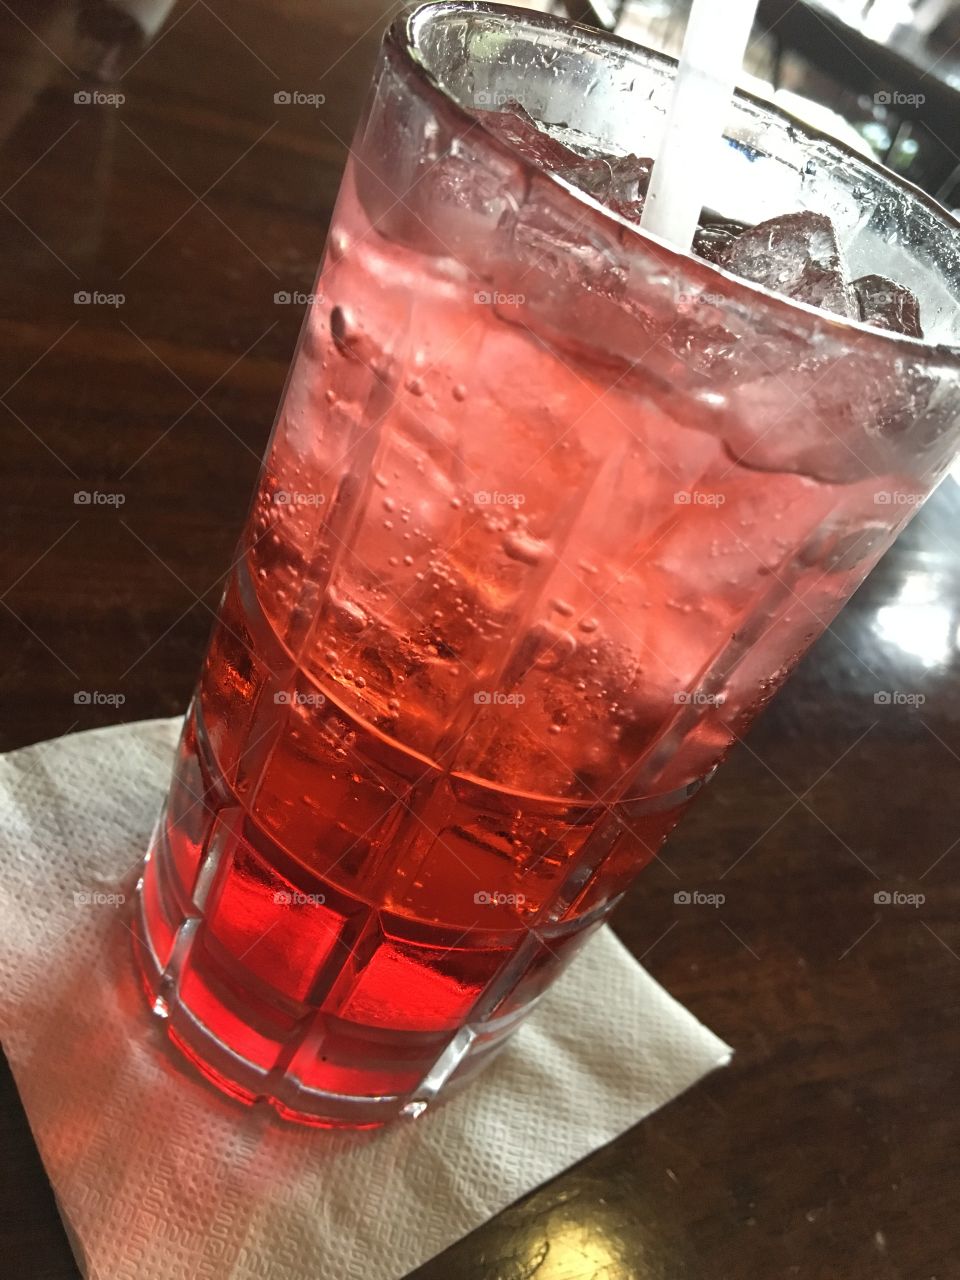 Raspberry lemon-lime soda
